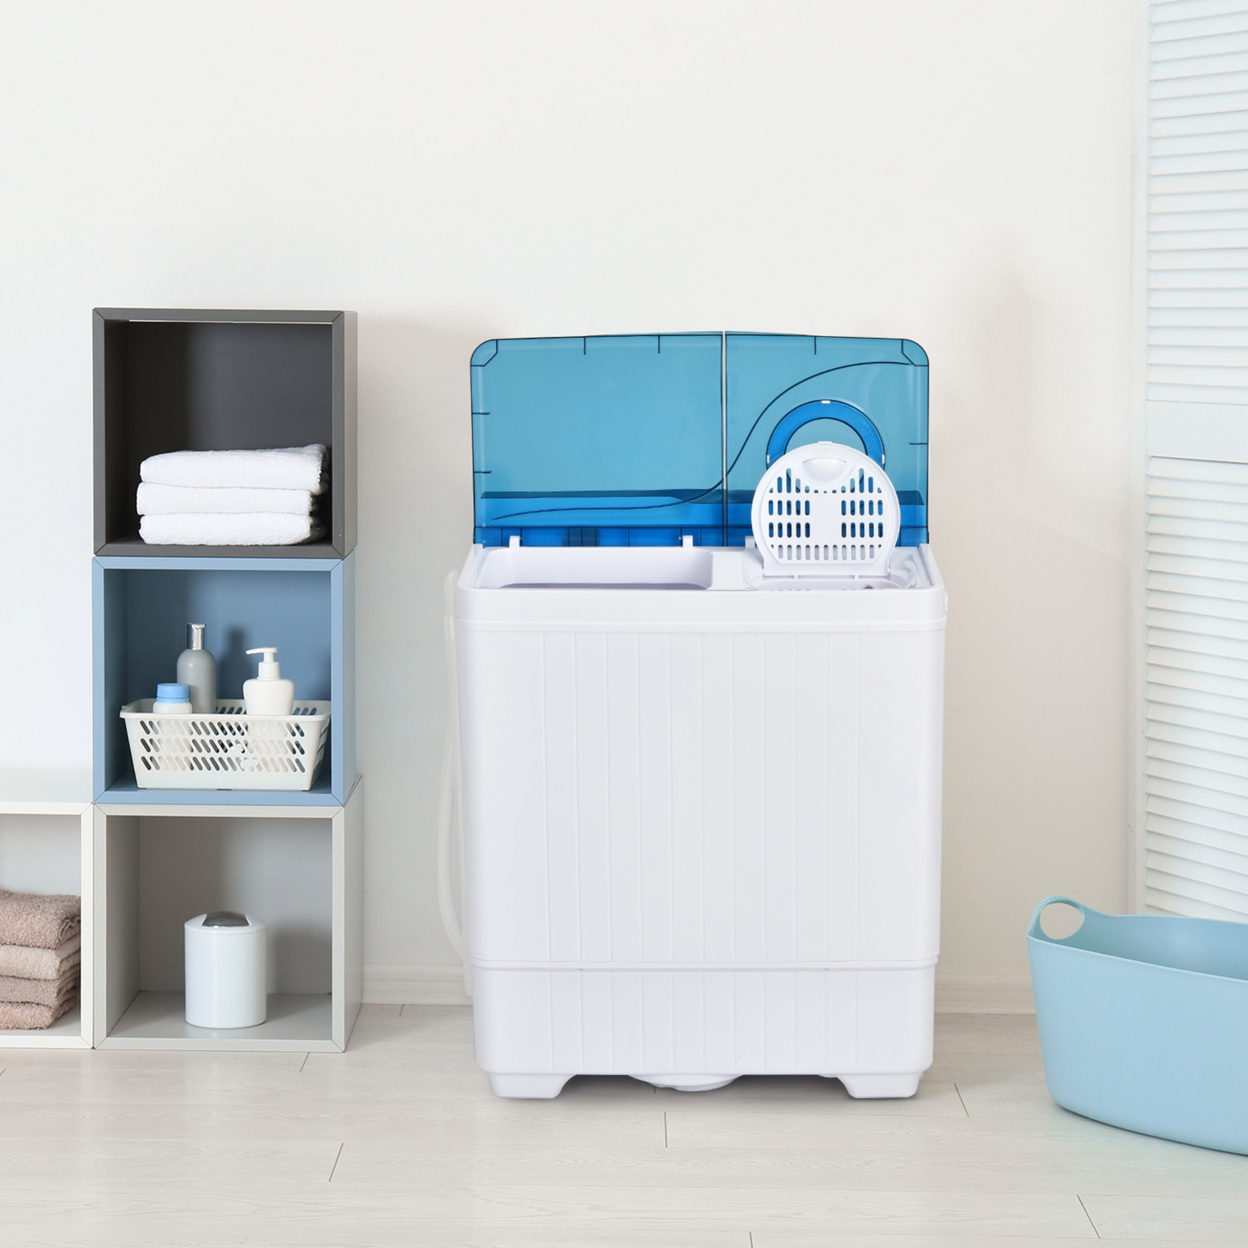 Portable Semi-automatic Washing Machine 26 Lbs Twin Tub Laundry Washer Blue